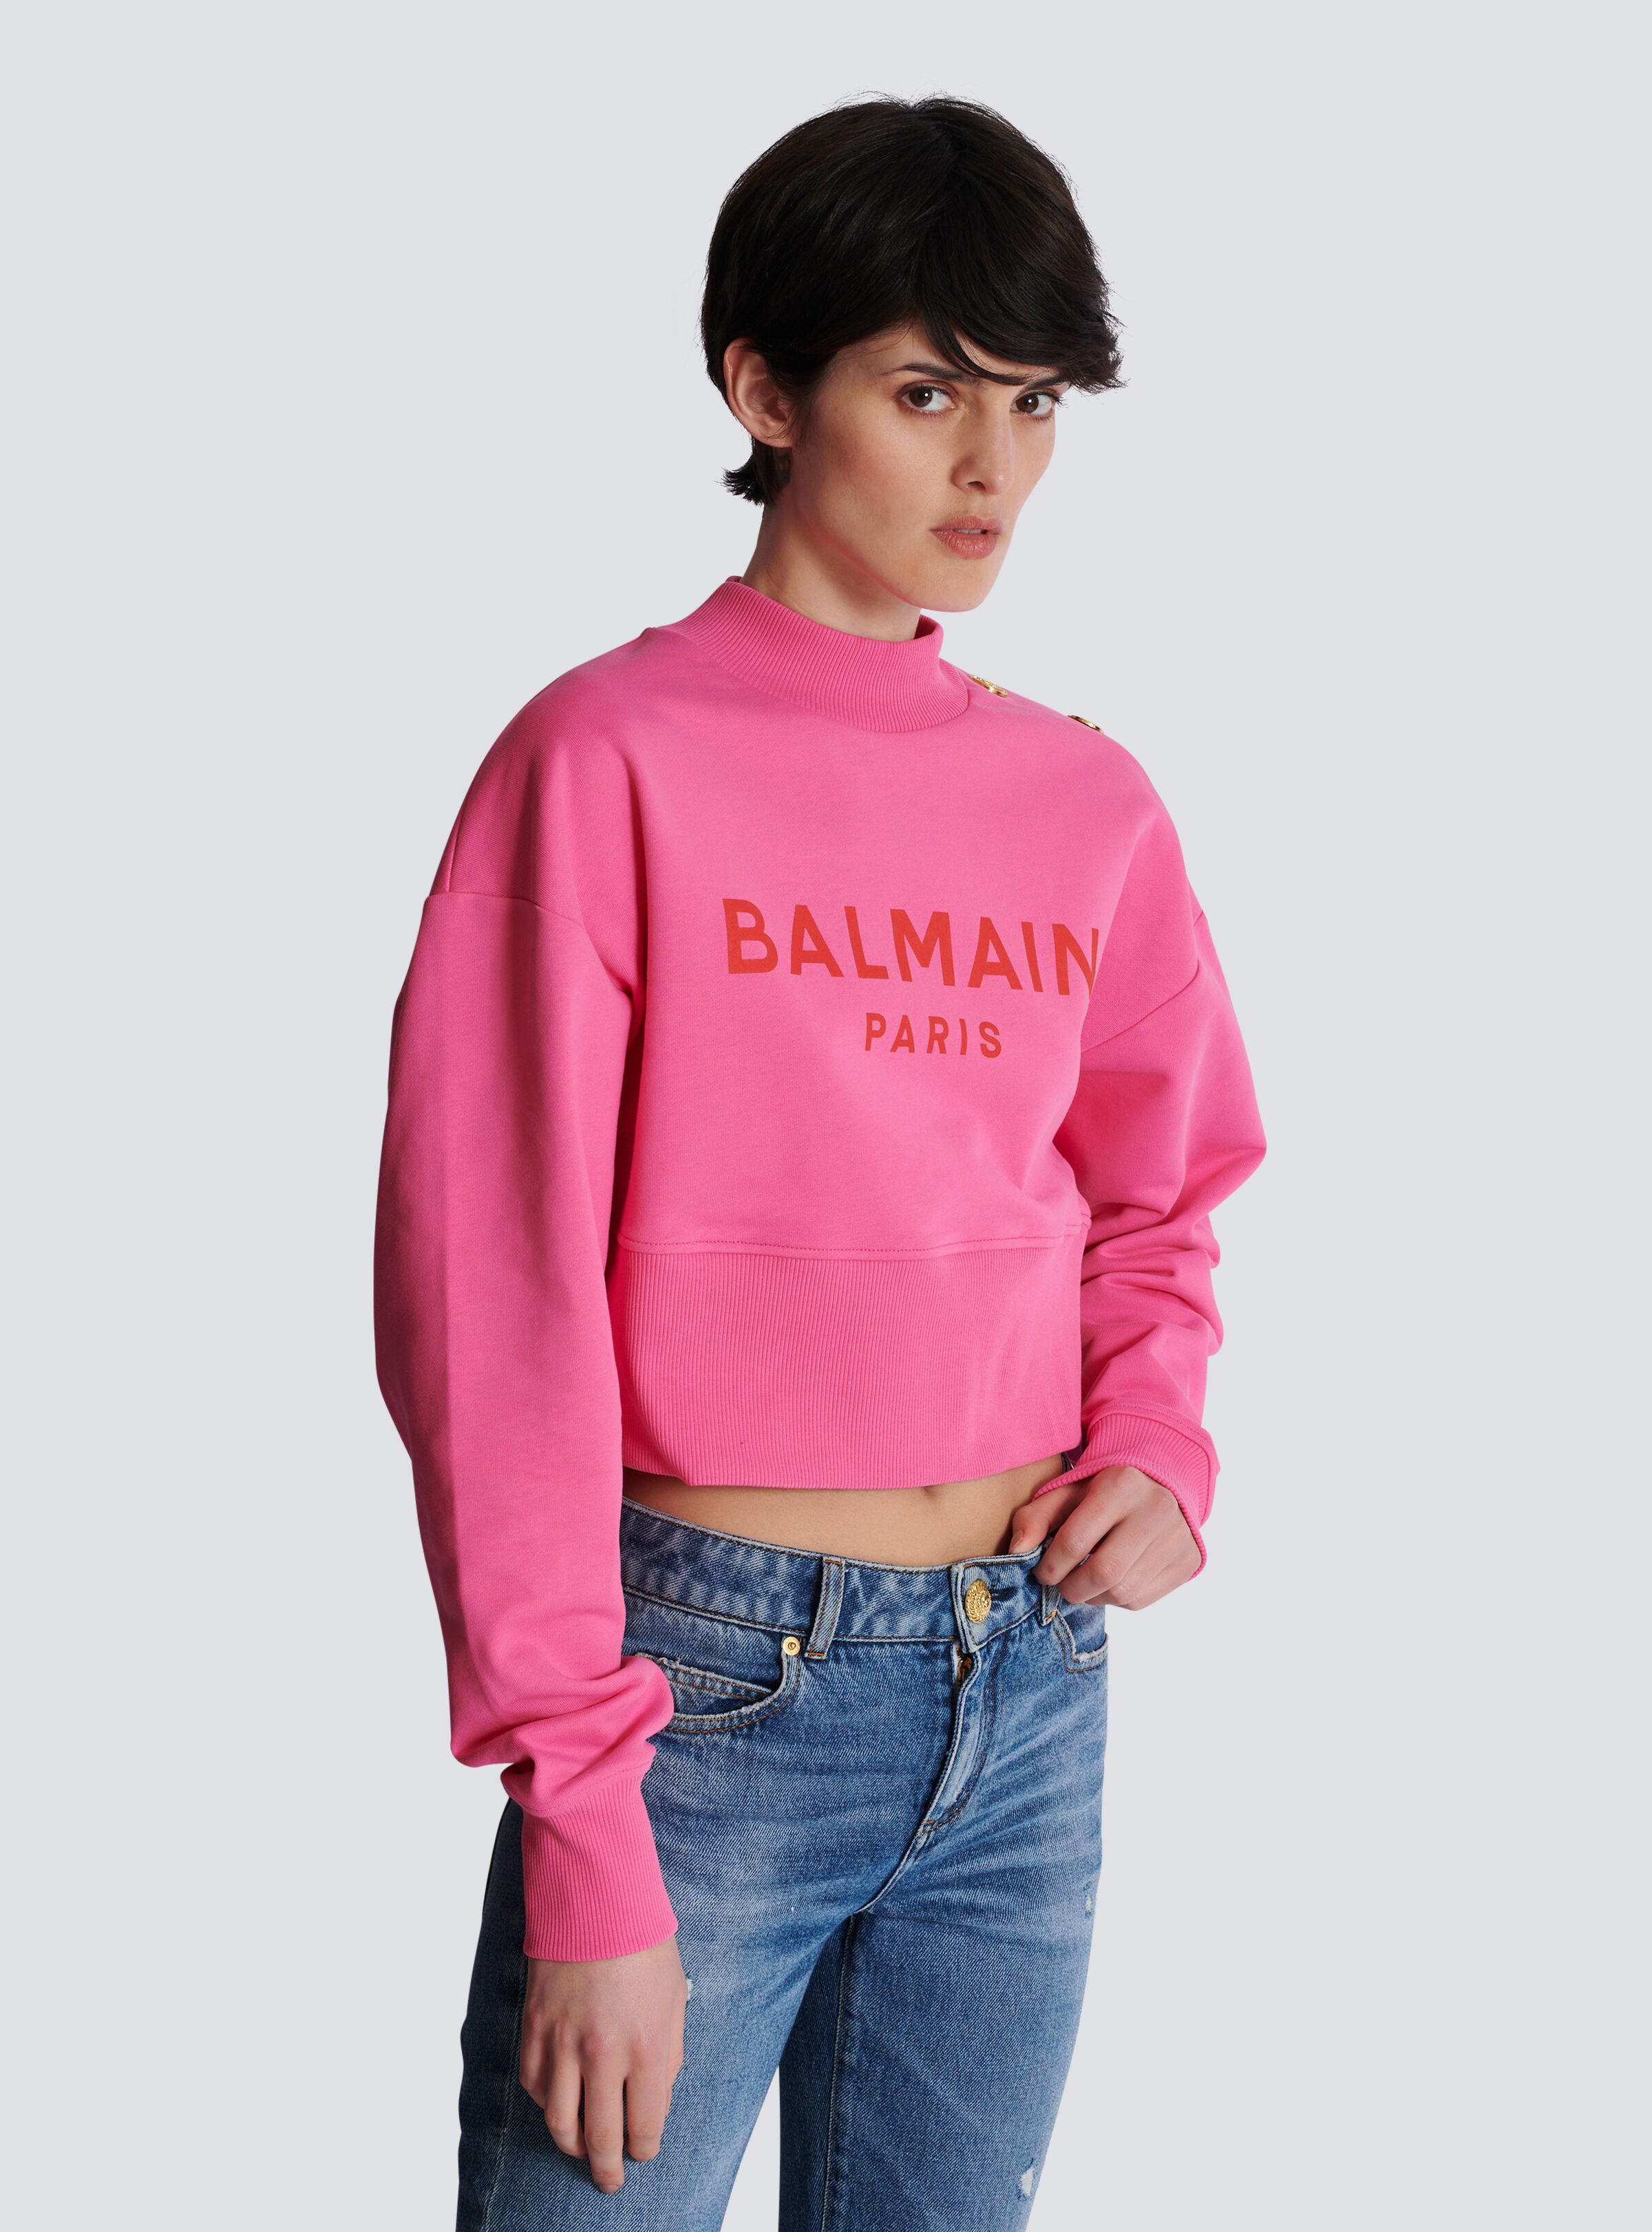 Cropped sweatshirt with Balmain Paris print - 6